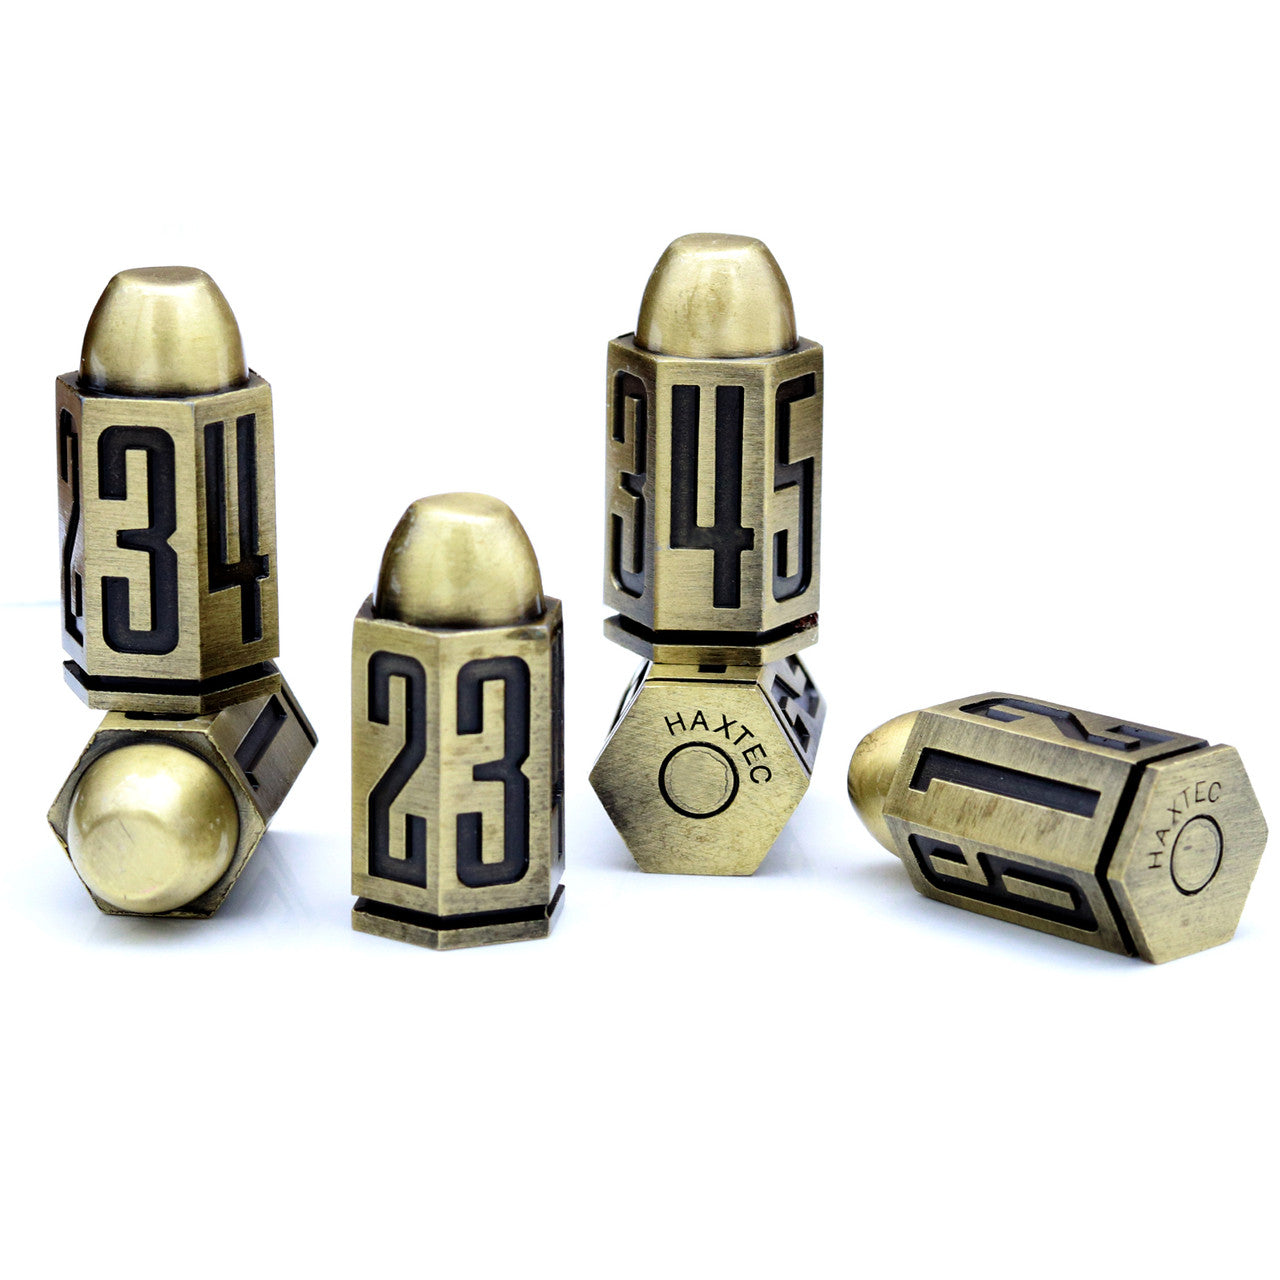 antique bronze metal d6 dice bullet dice metal by haxtec dice